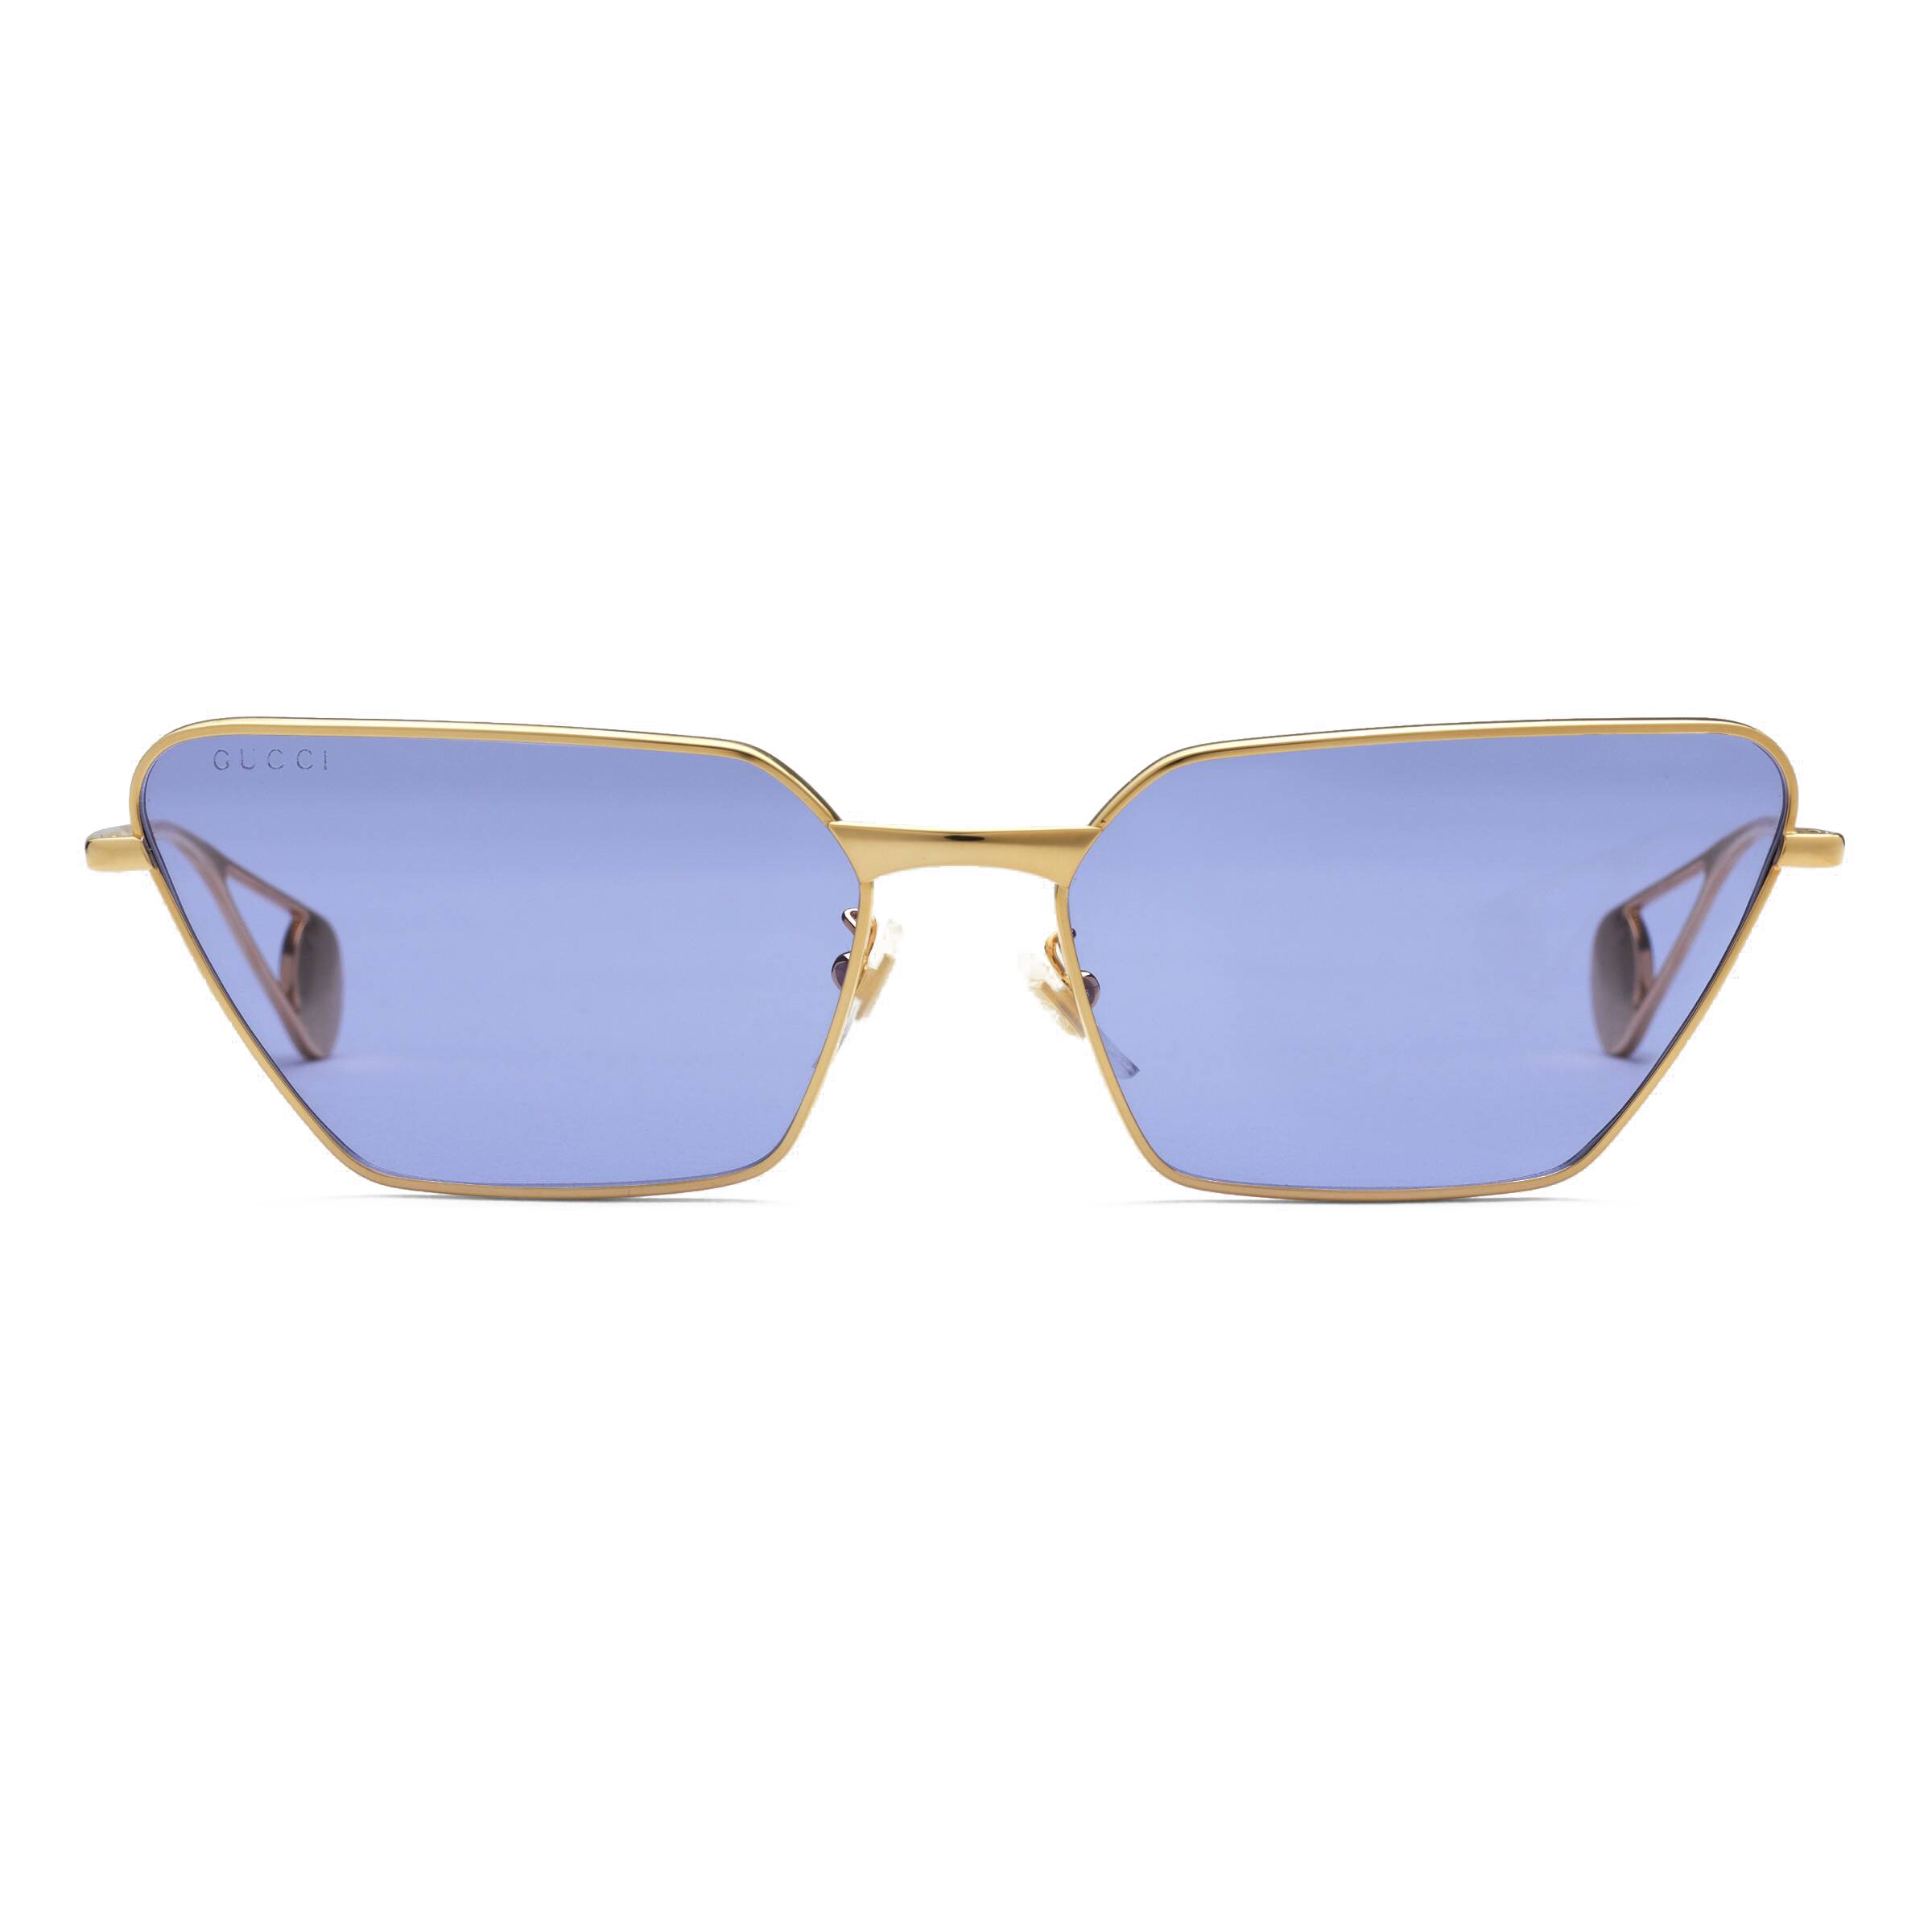 gucci sunglasses blue lens